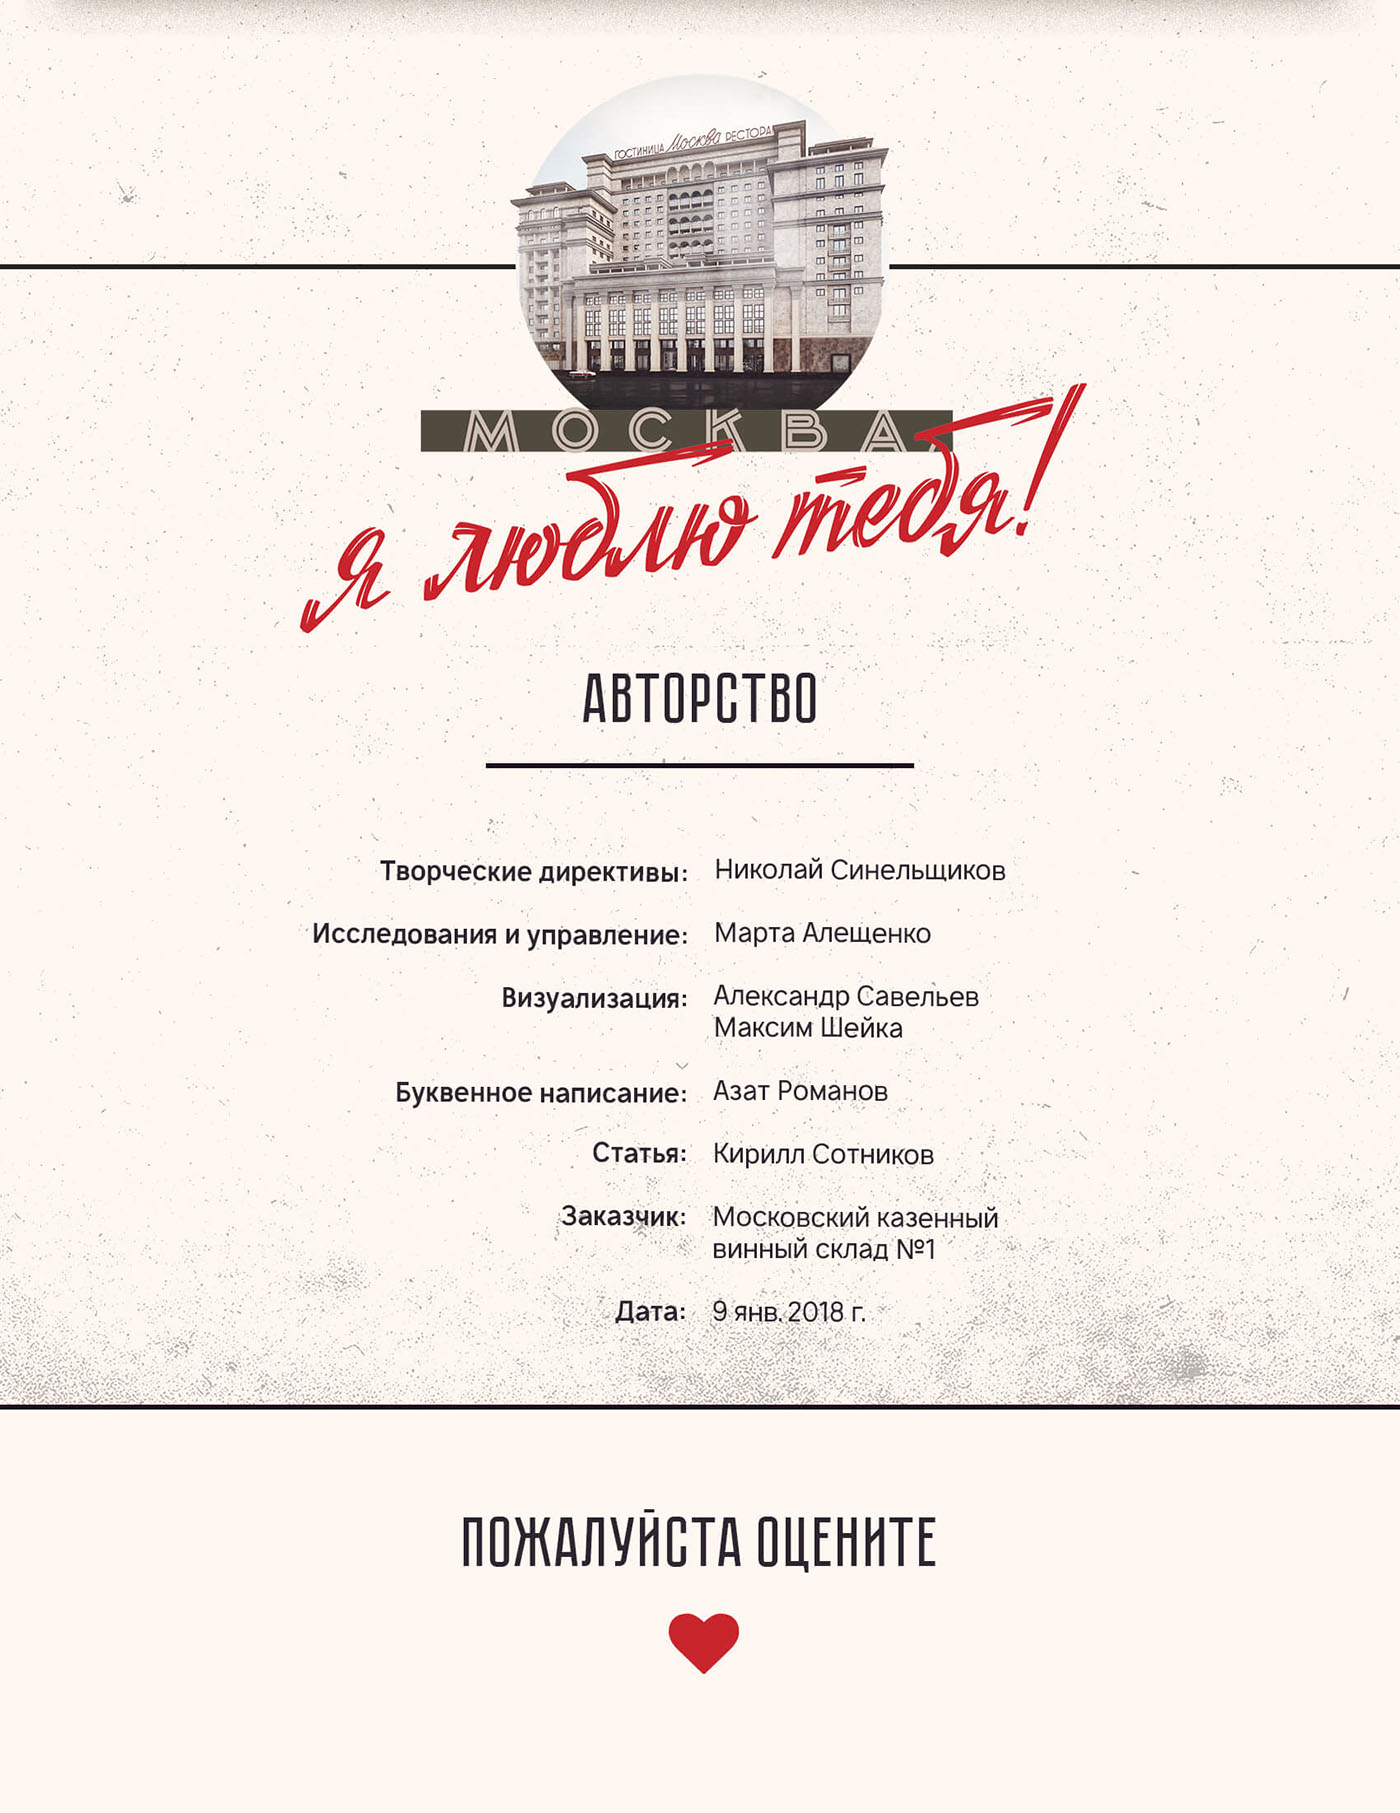 Soviet modernism constructivism Moscow